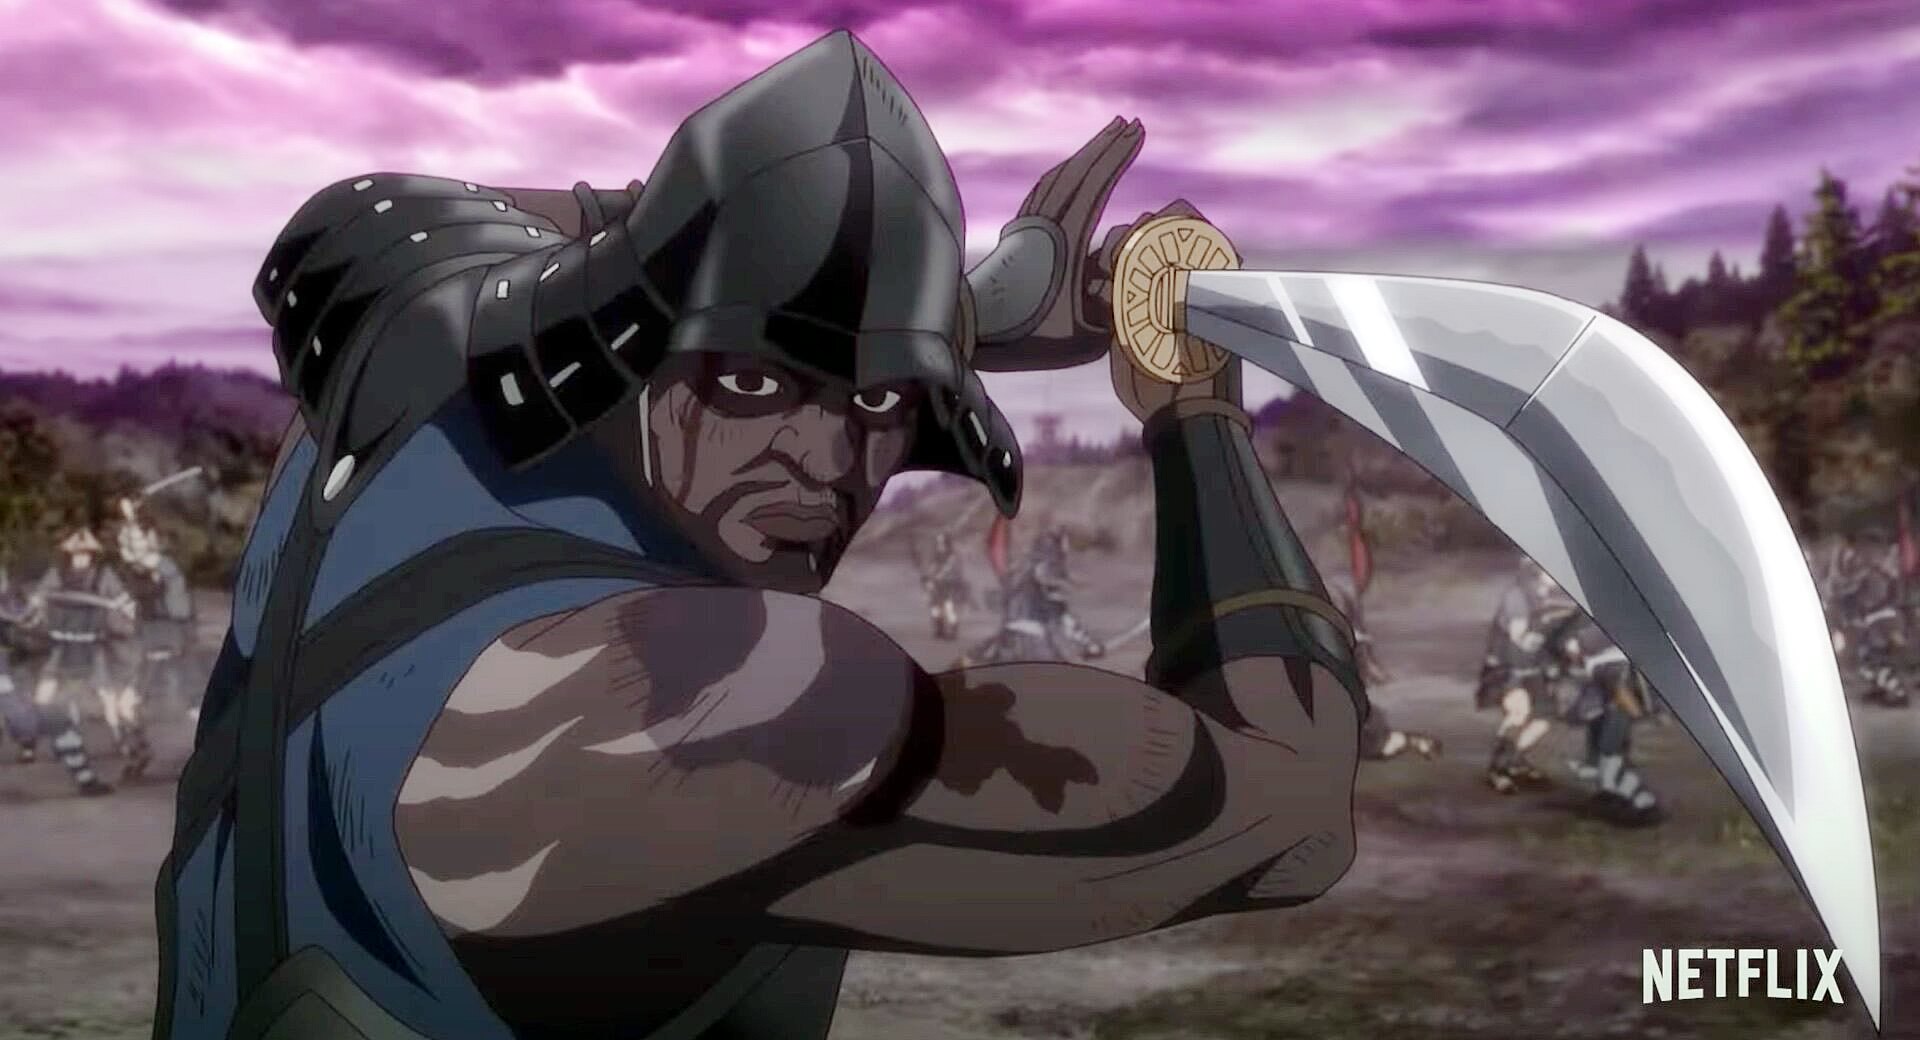 YASUKE | Série anime inspirada no primeiro guerreiro samurai africano na Netflix